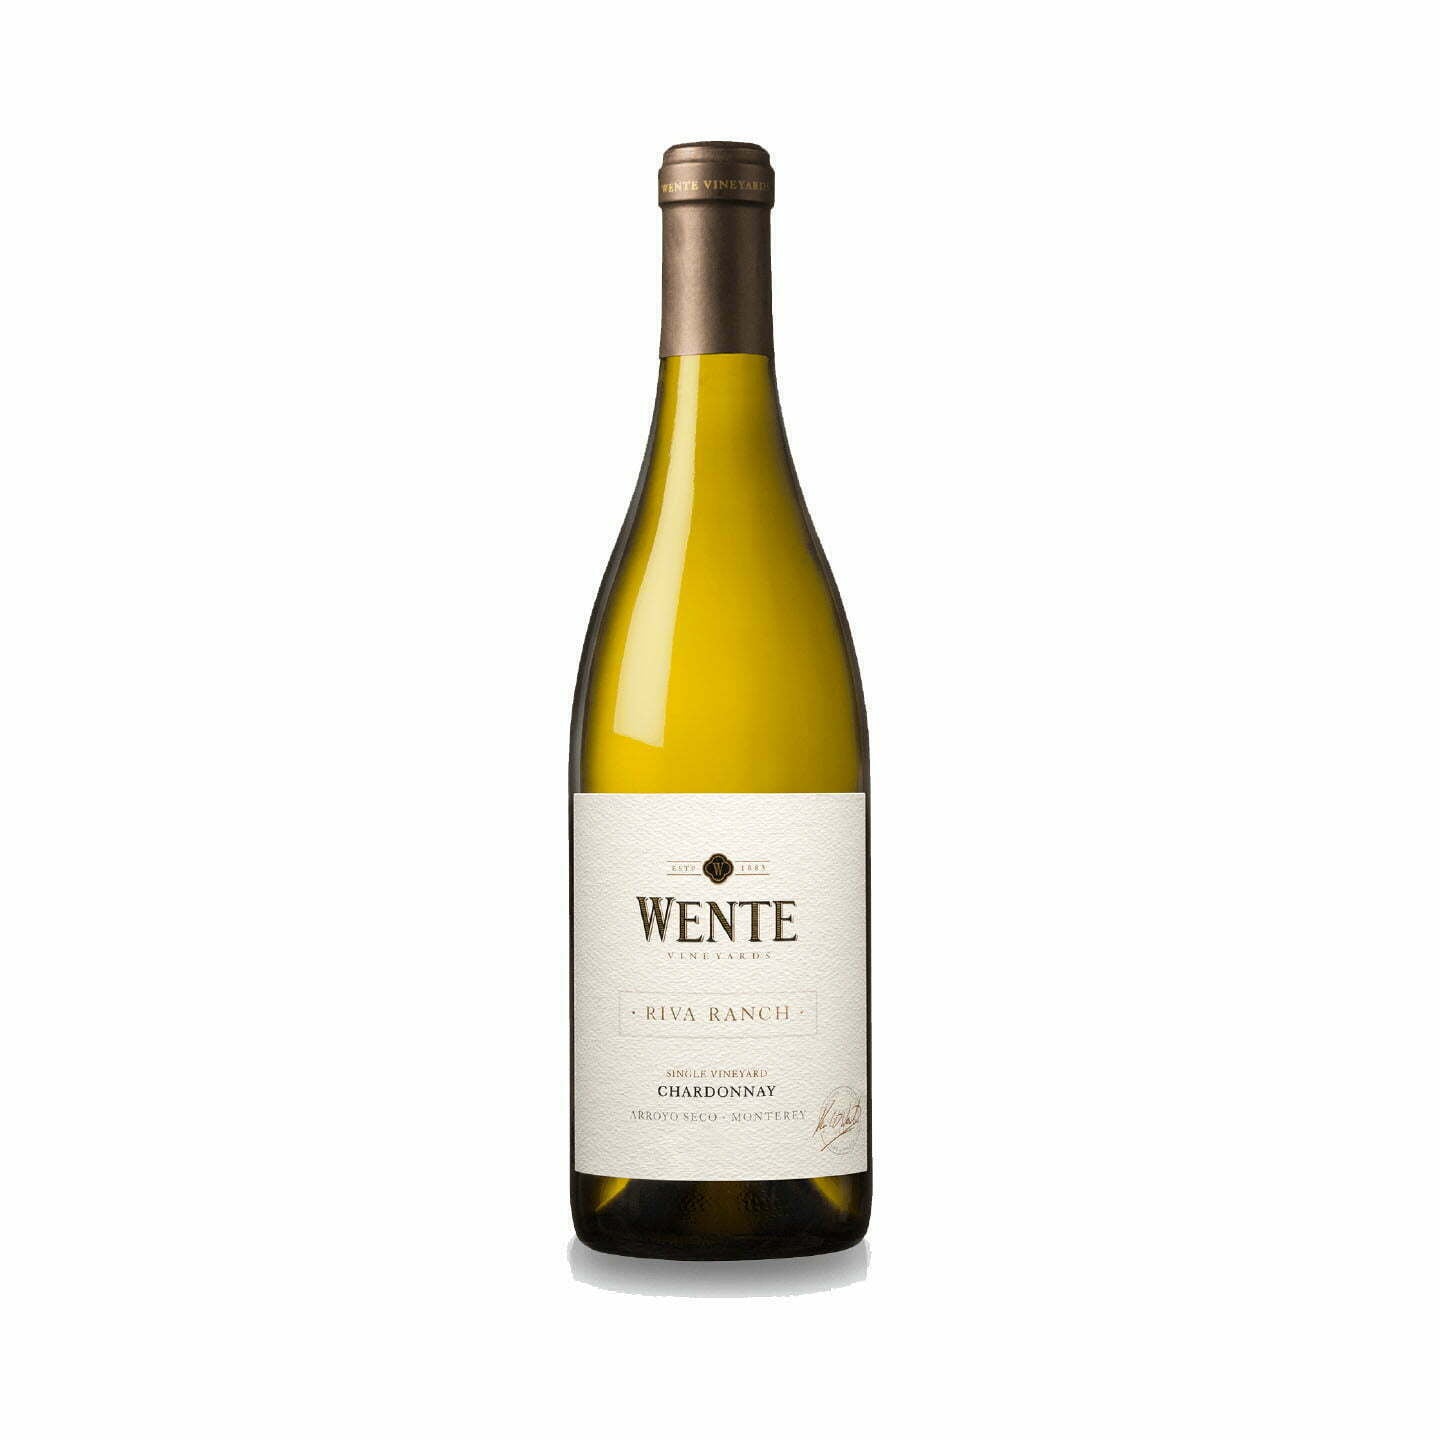 Wente Riva Ranch Single Vineyard Chardonnay 2020 (1x75cl) - TwoMoreGlasses.com